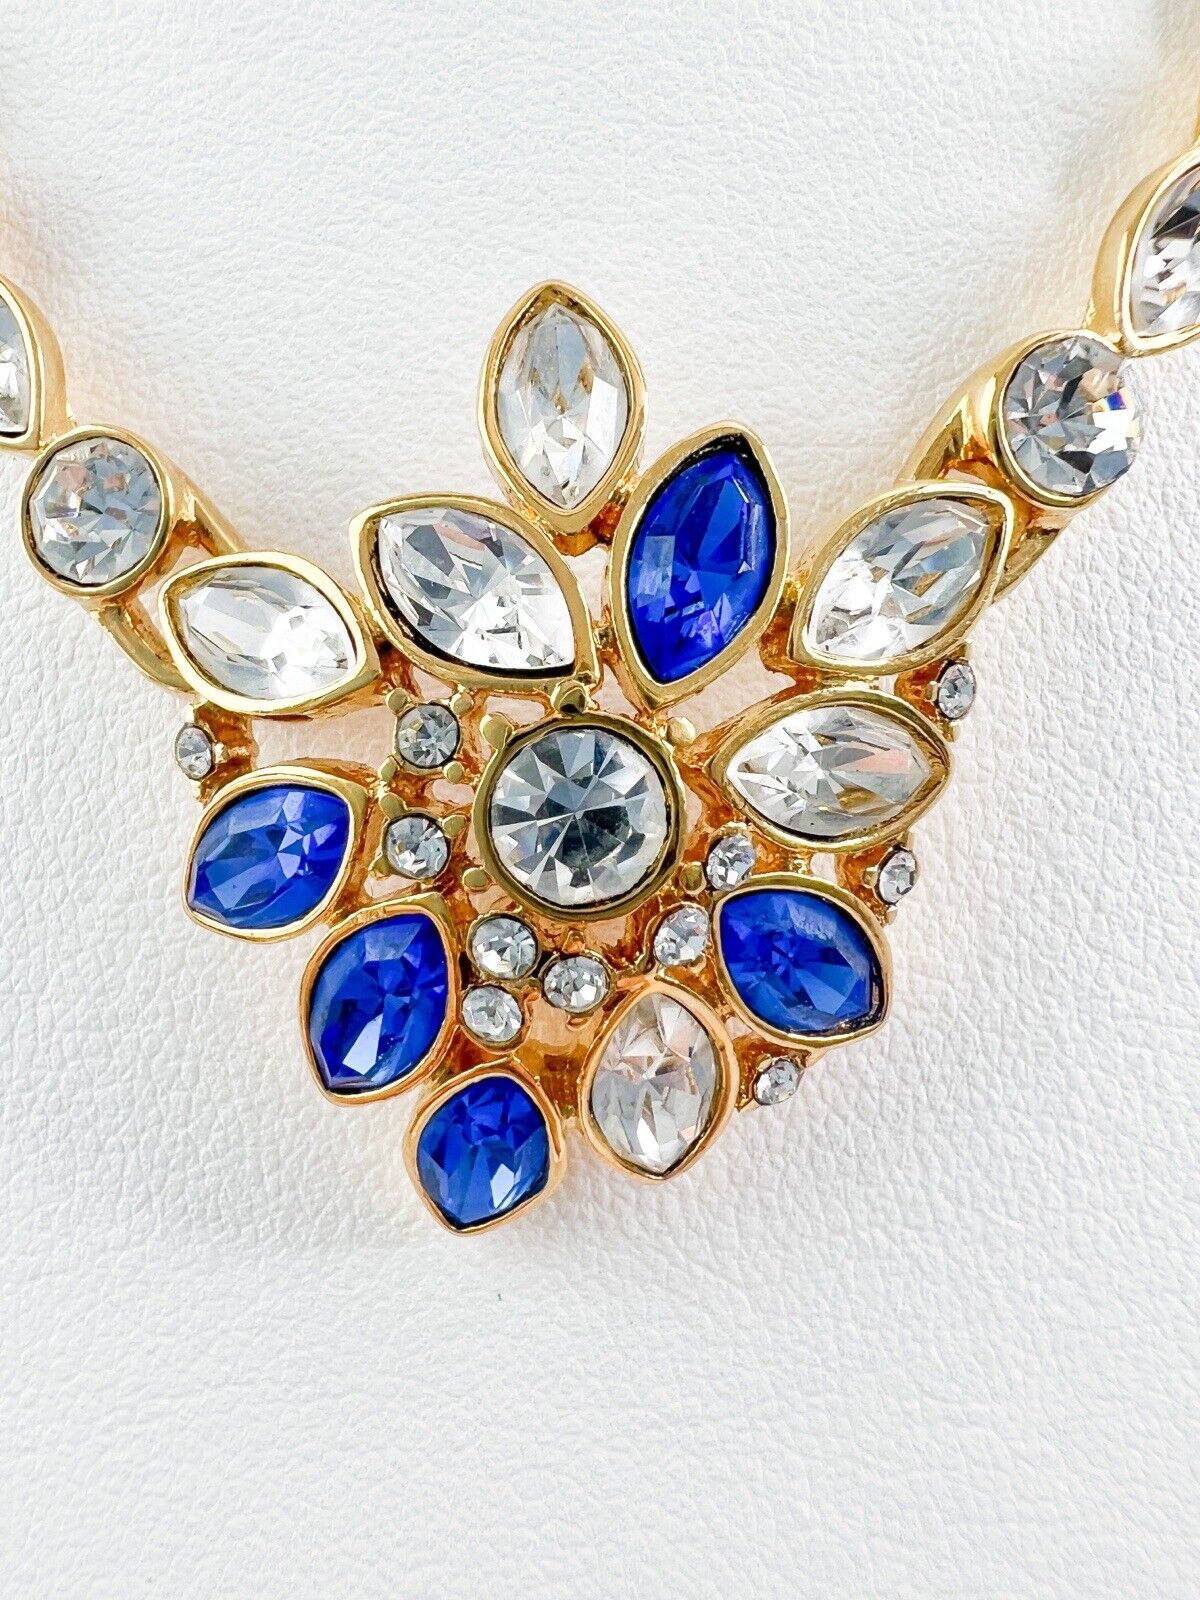 Monet Vintage Choker Necklace Rhinestones Blue